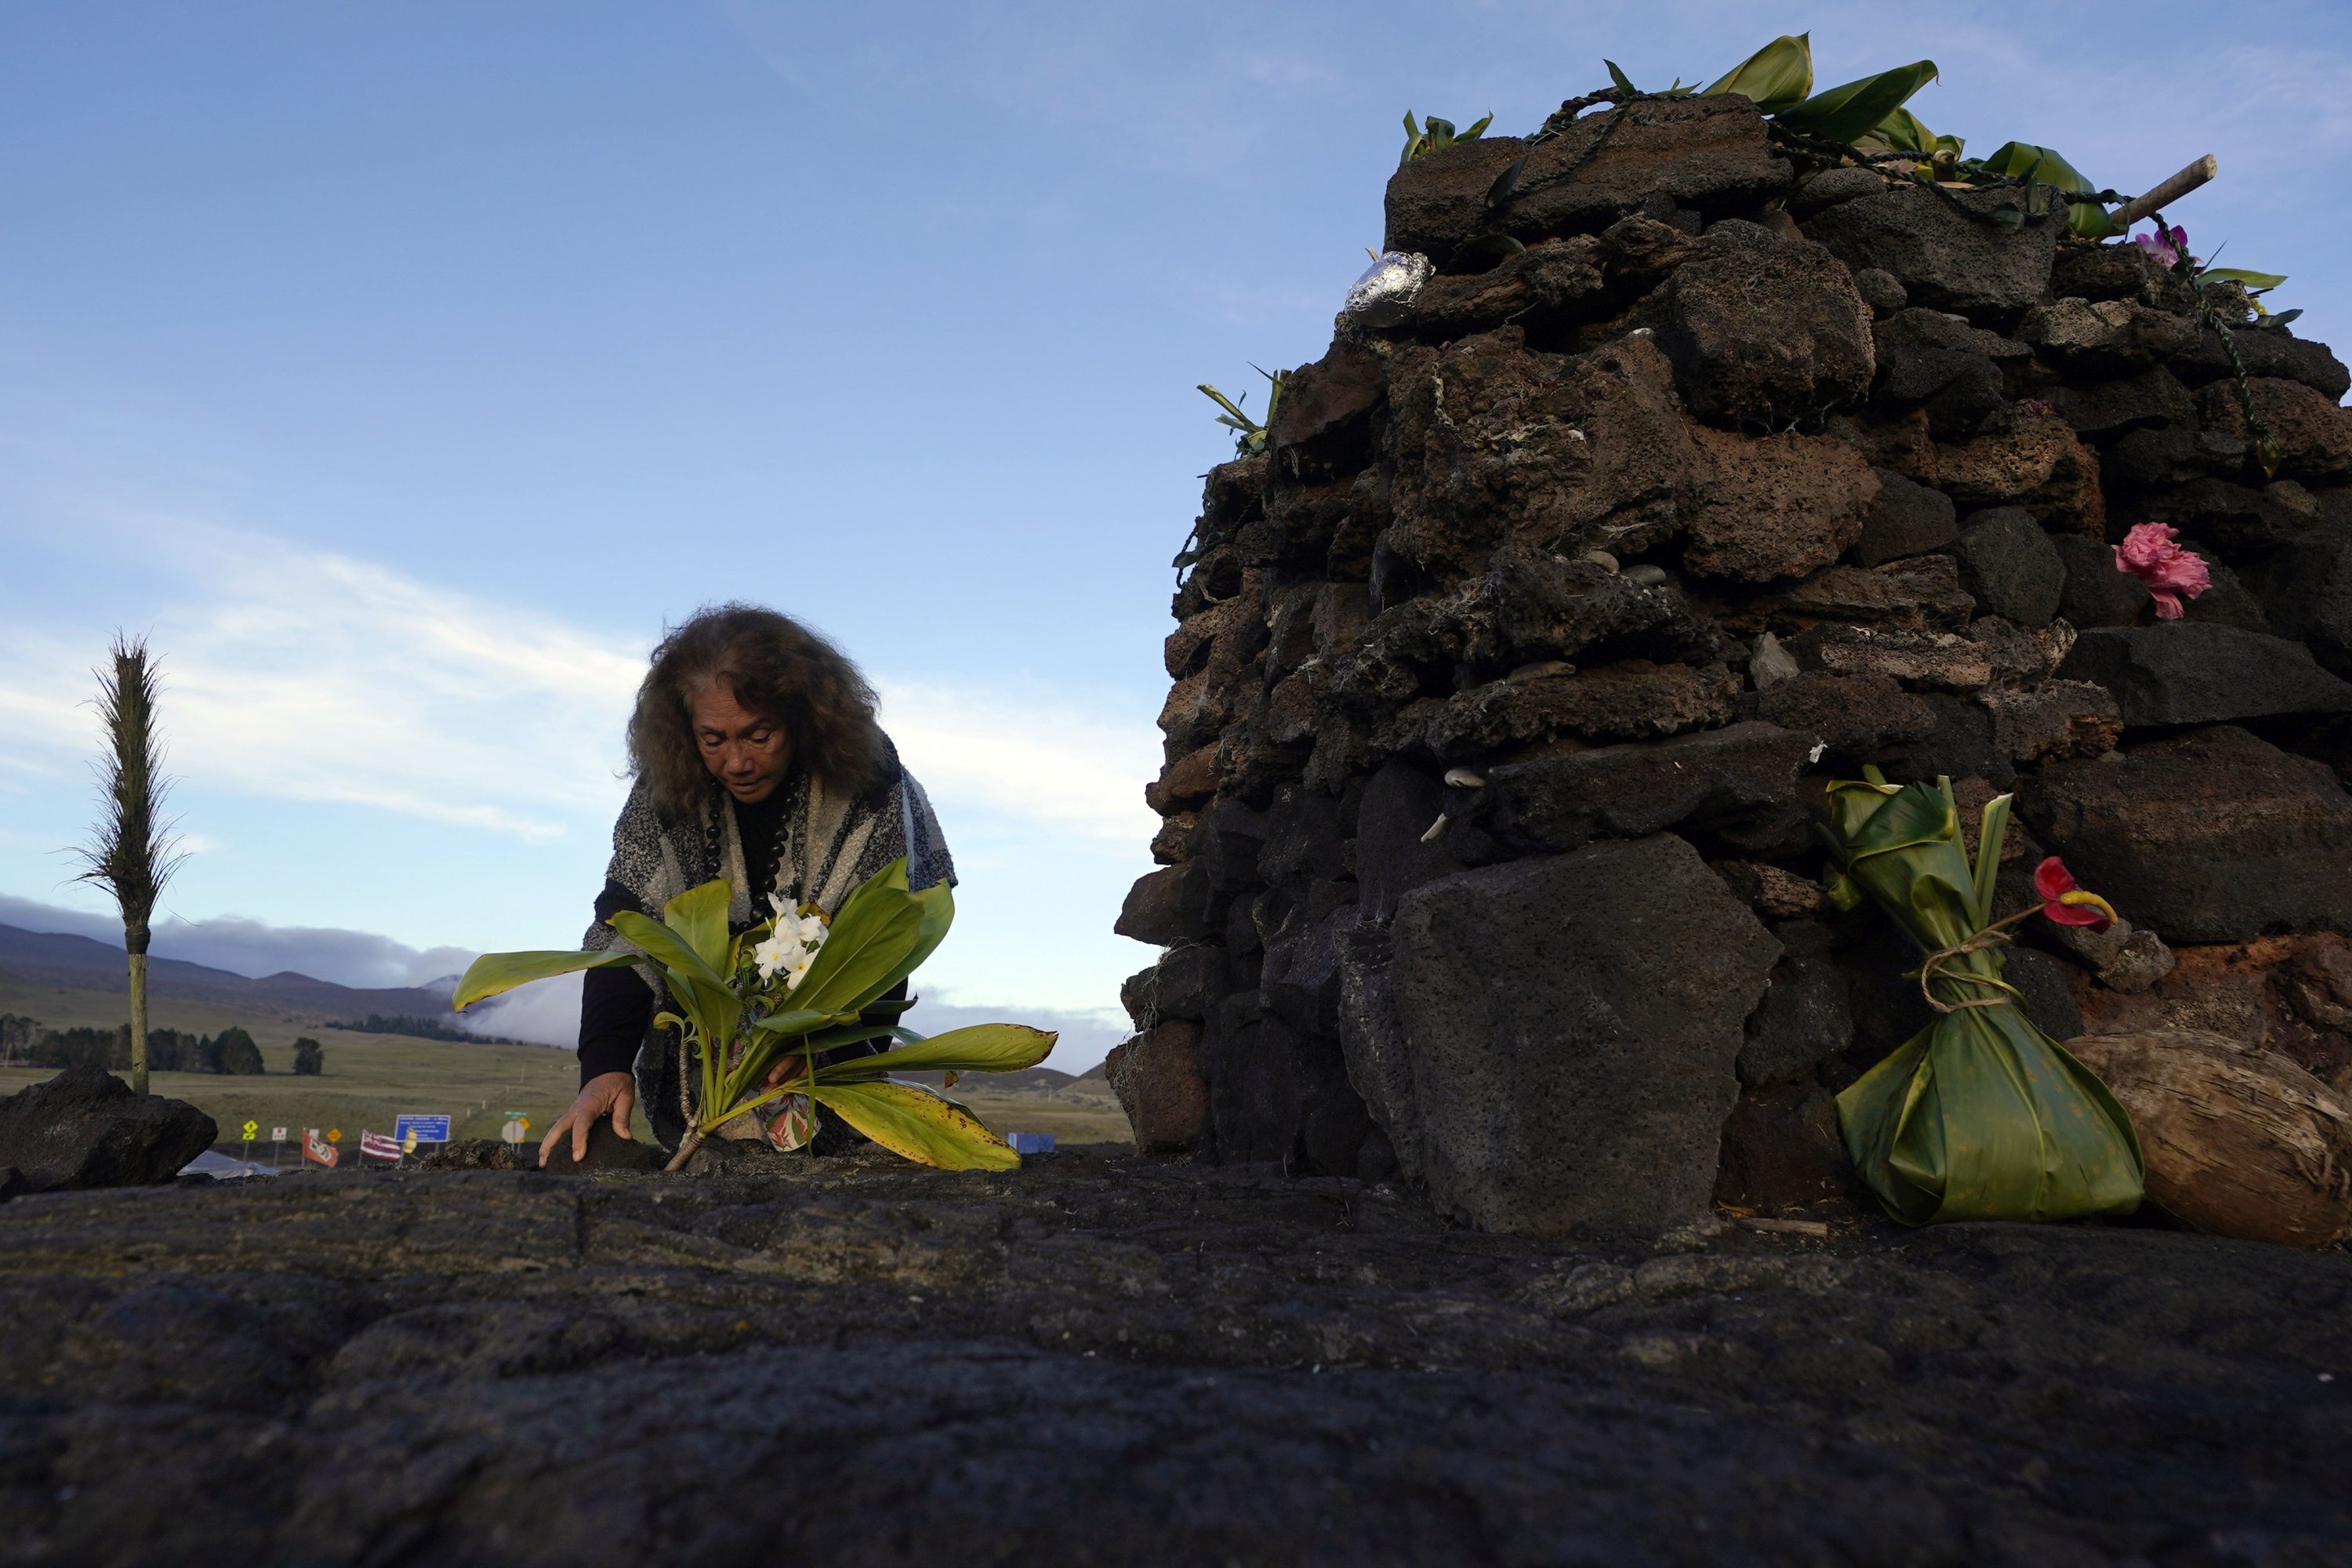 Illona Ilae, dari Kailua-Kona, Hawaii, meninggalkan persembahan di depan alter di bawah gunung berapi Mauna Loa saat meletus, dekat Hilo, Hawaii, AS, 1 Desember 2022. (Foto AP)